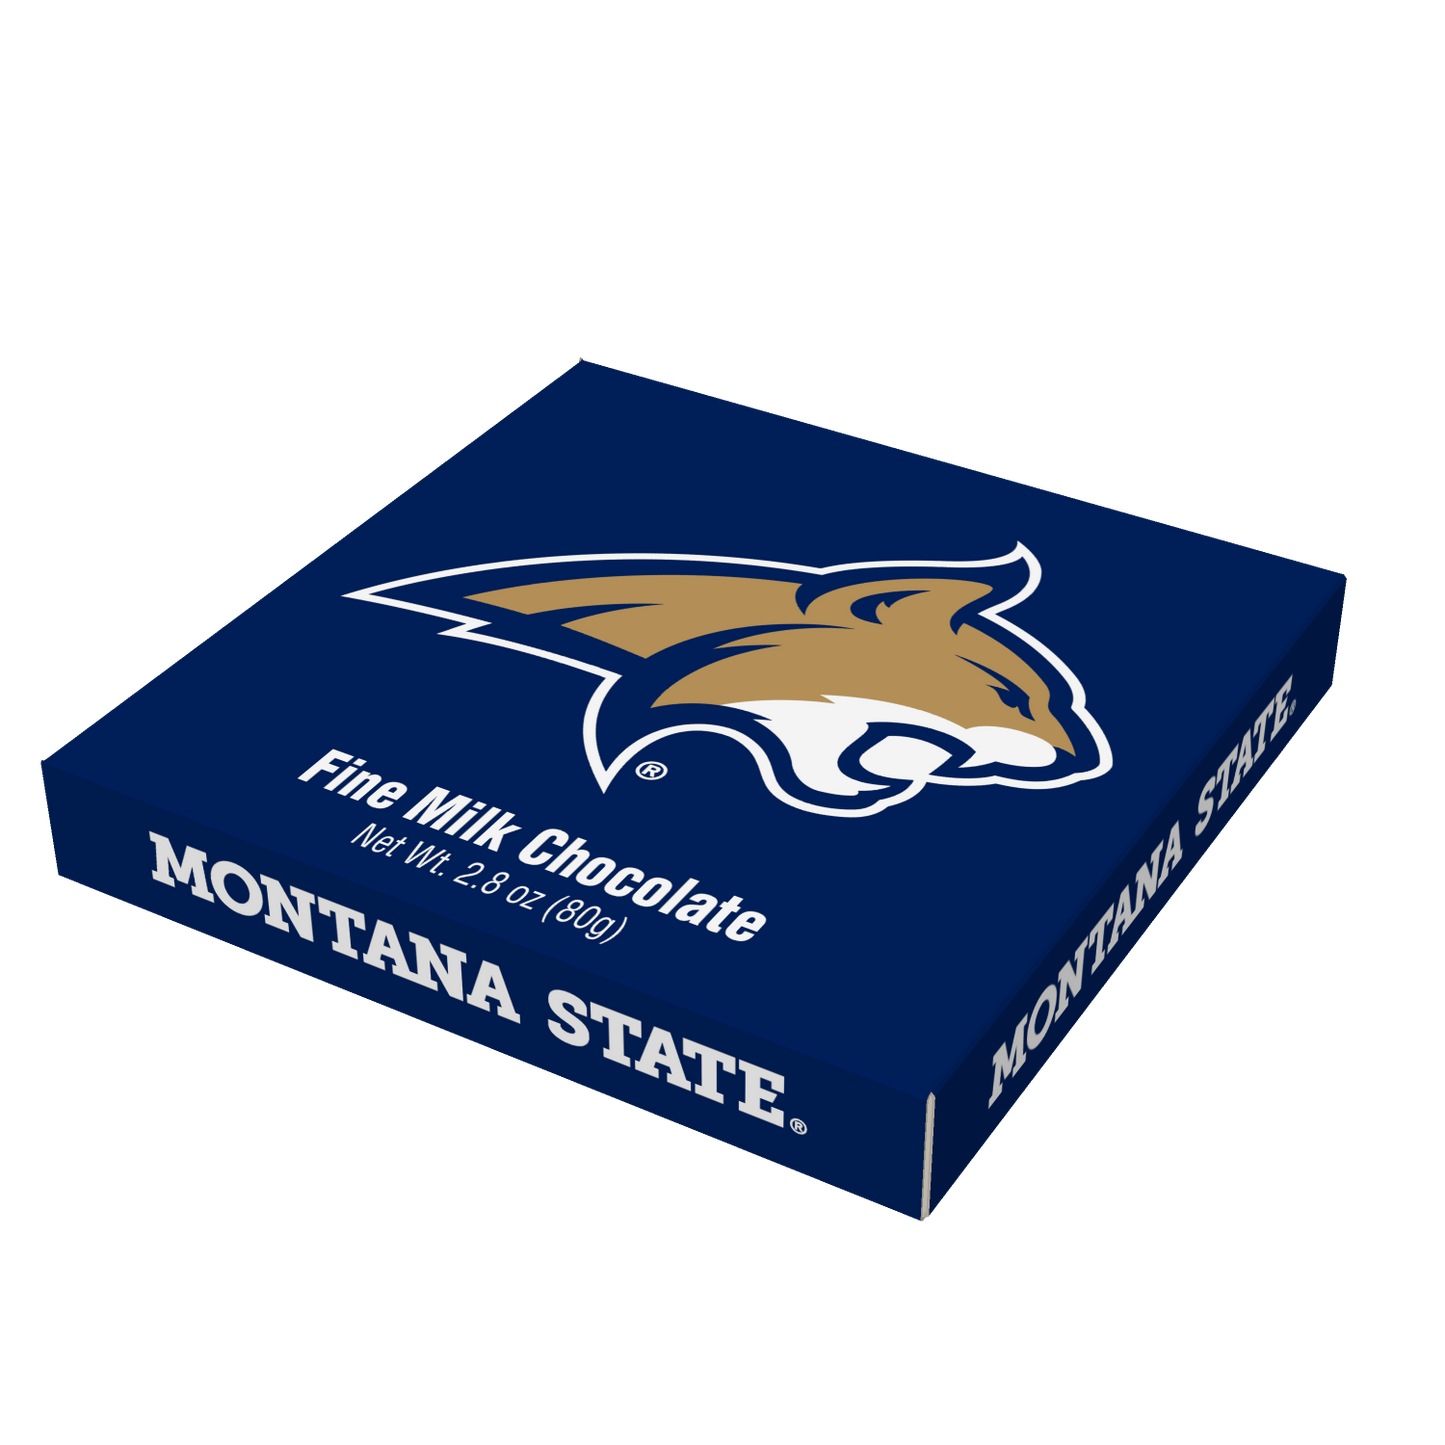 Montana State Bobcats Embossed Chocolate Bar